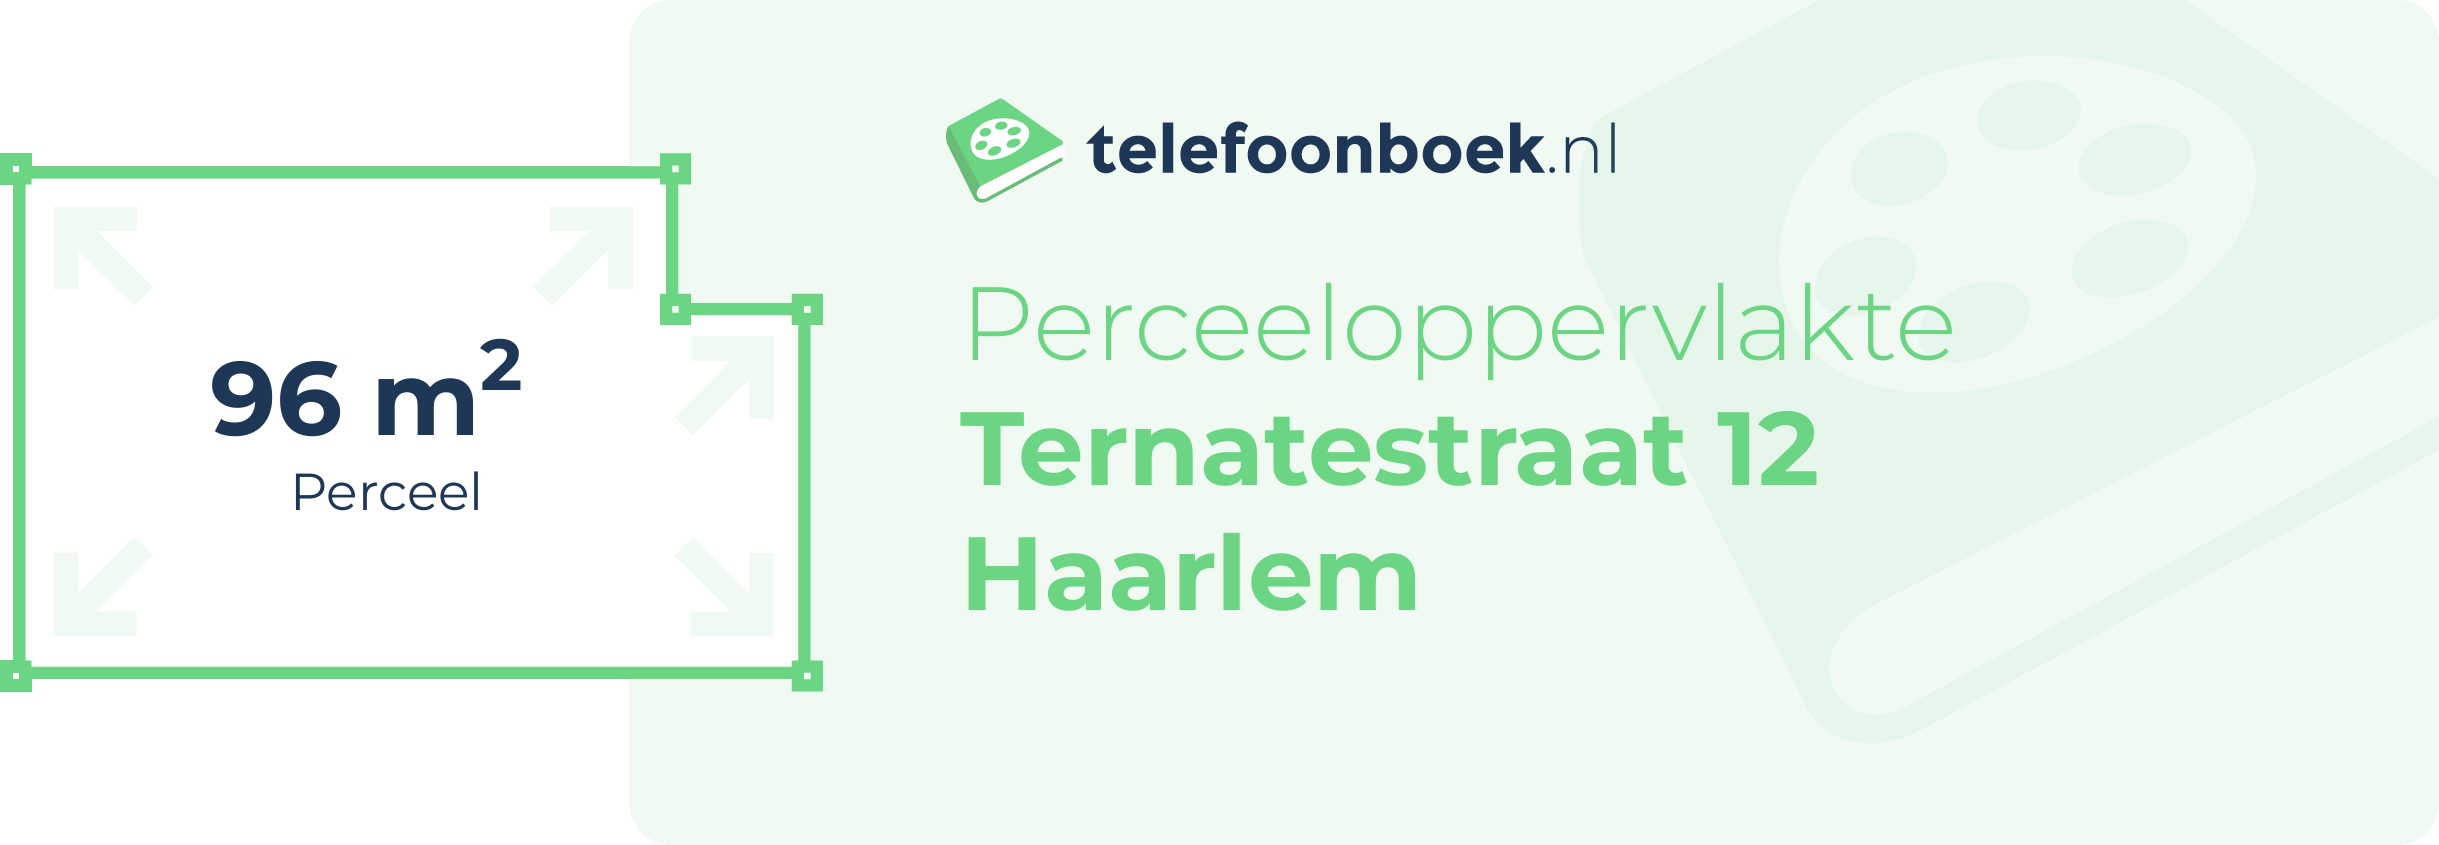 Perceeloppervlakte Ternatestraat 12 Haarlem